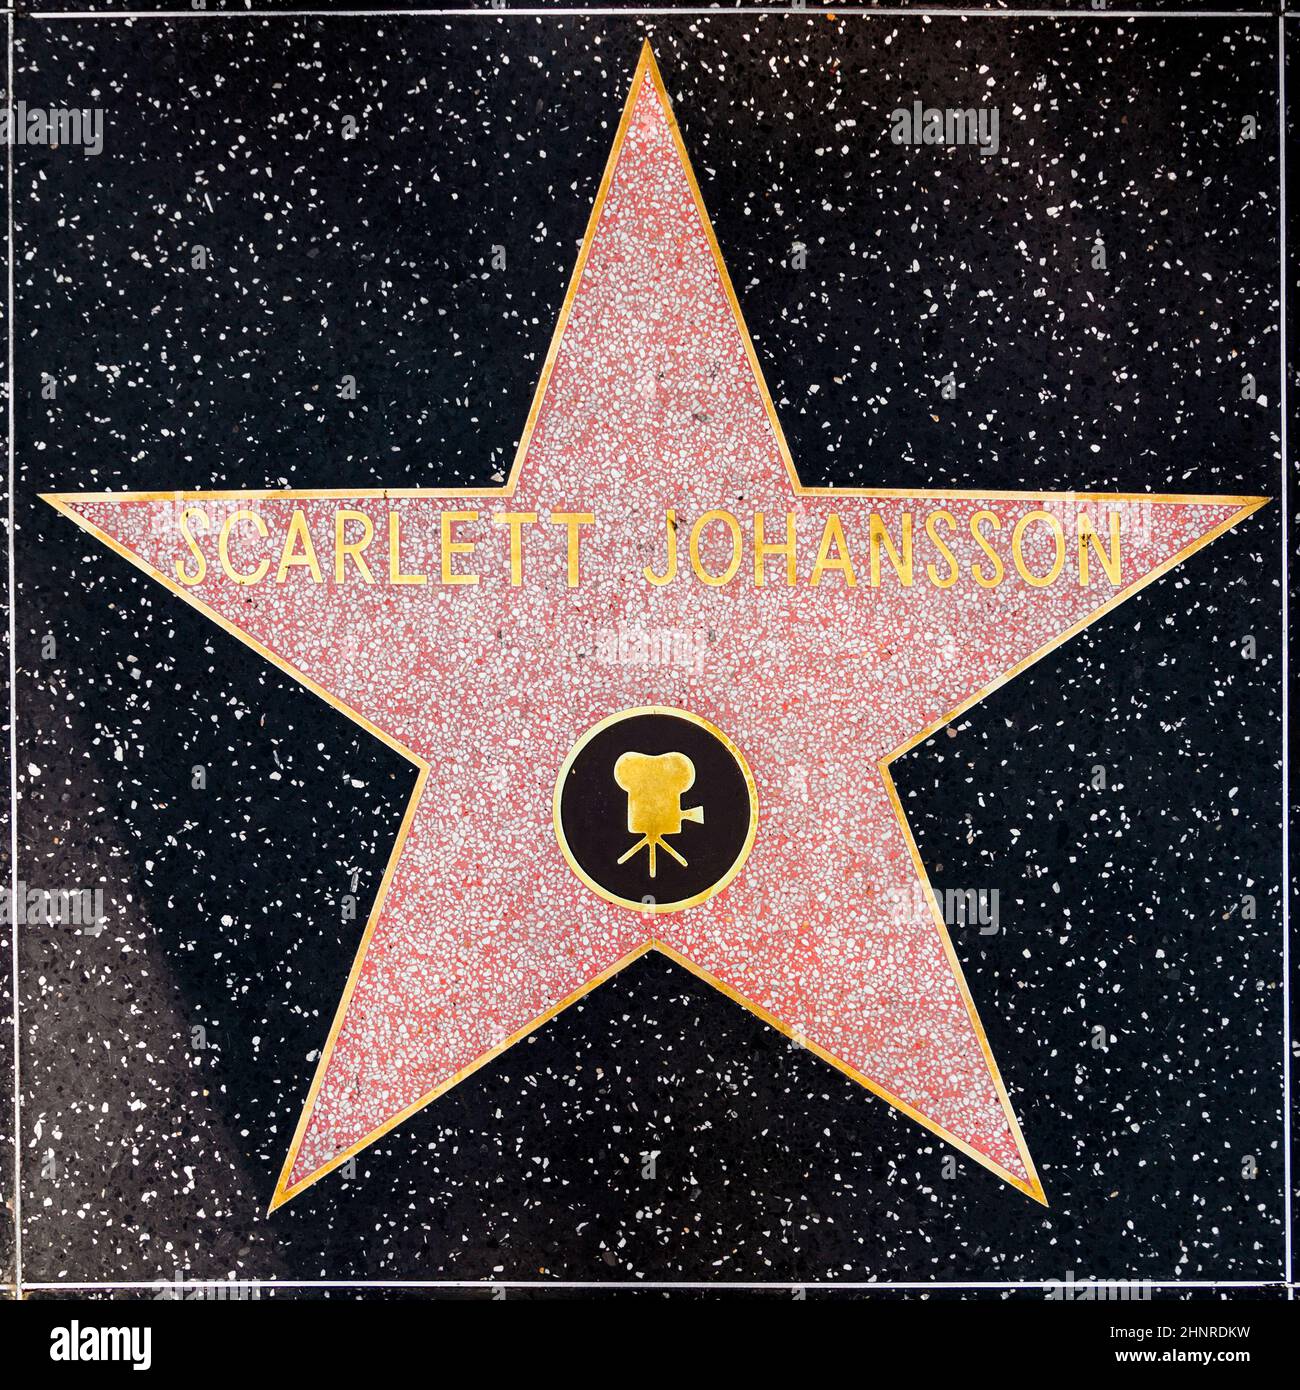 Scarlett Johansen's star on Hollywood Walk of Fame Stock Photo